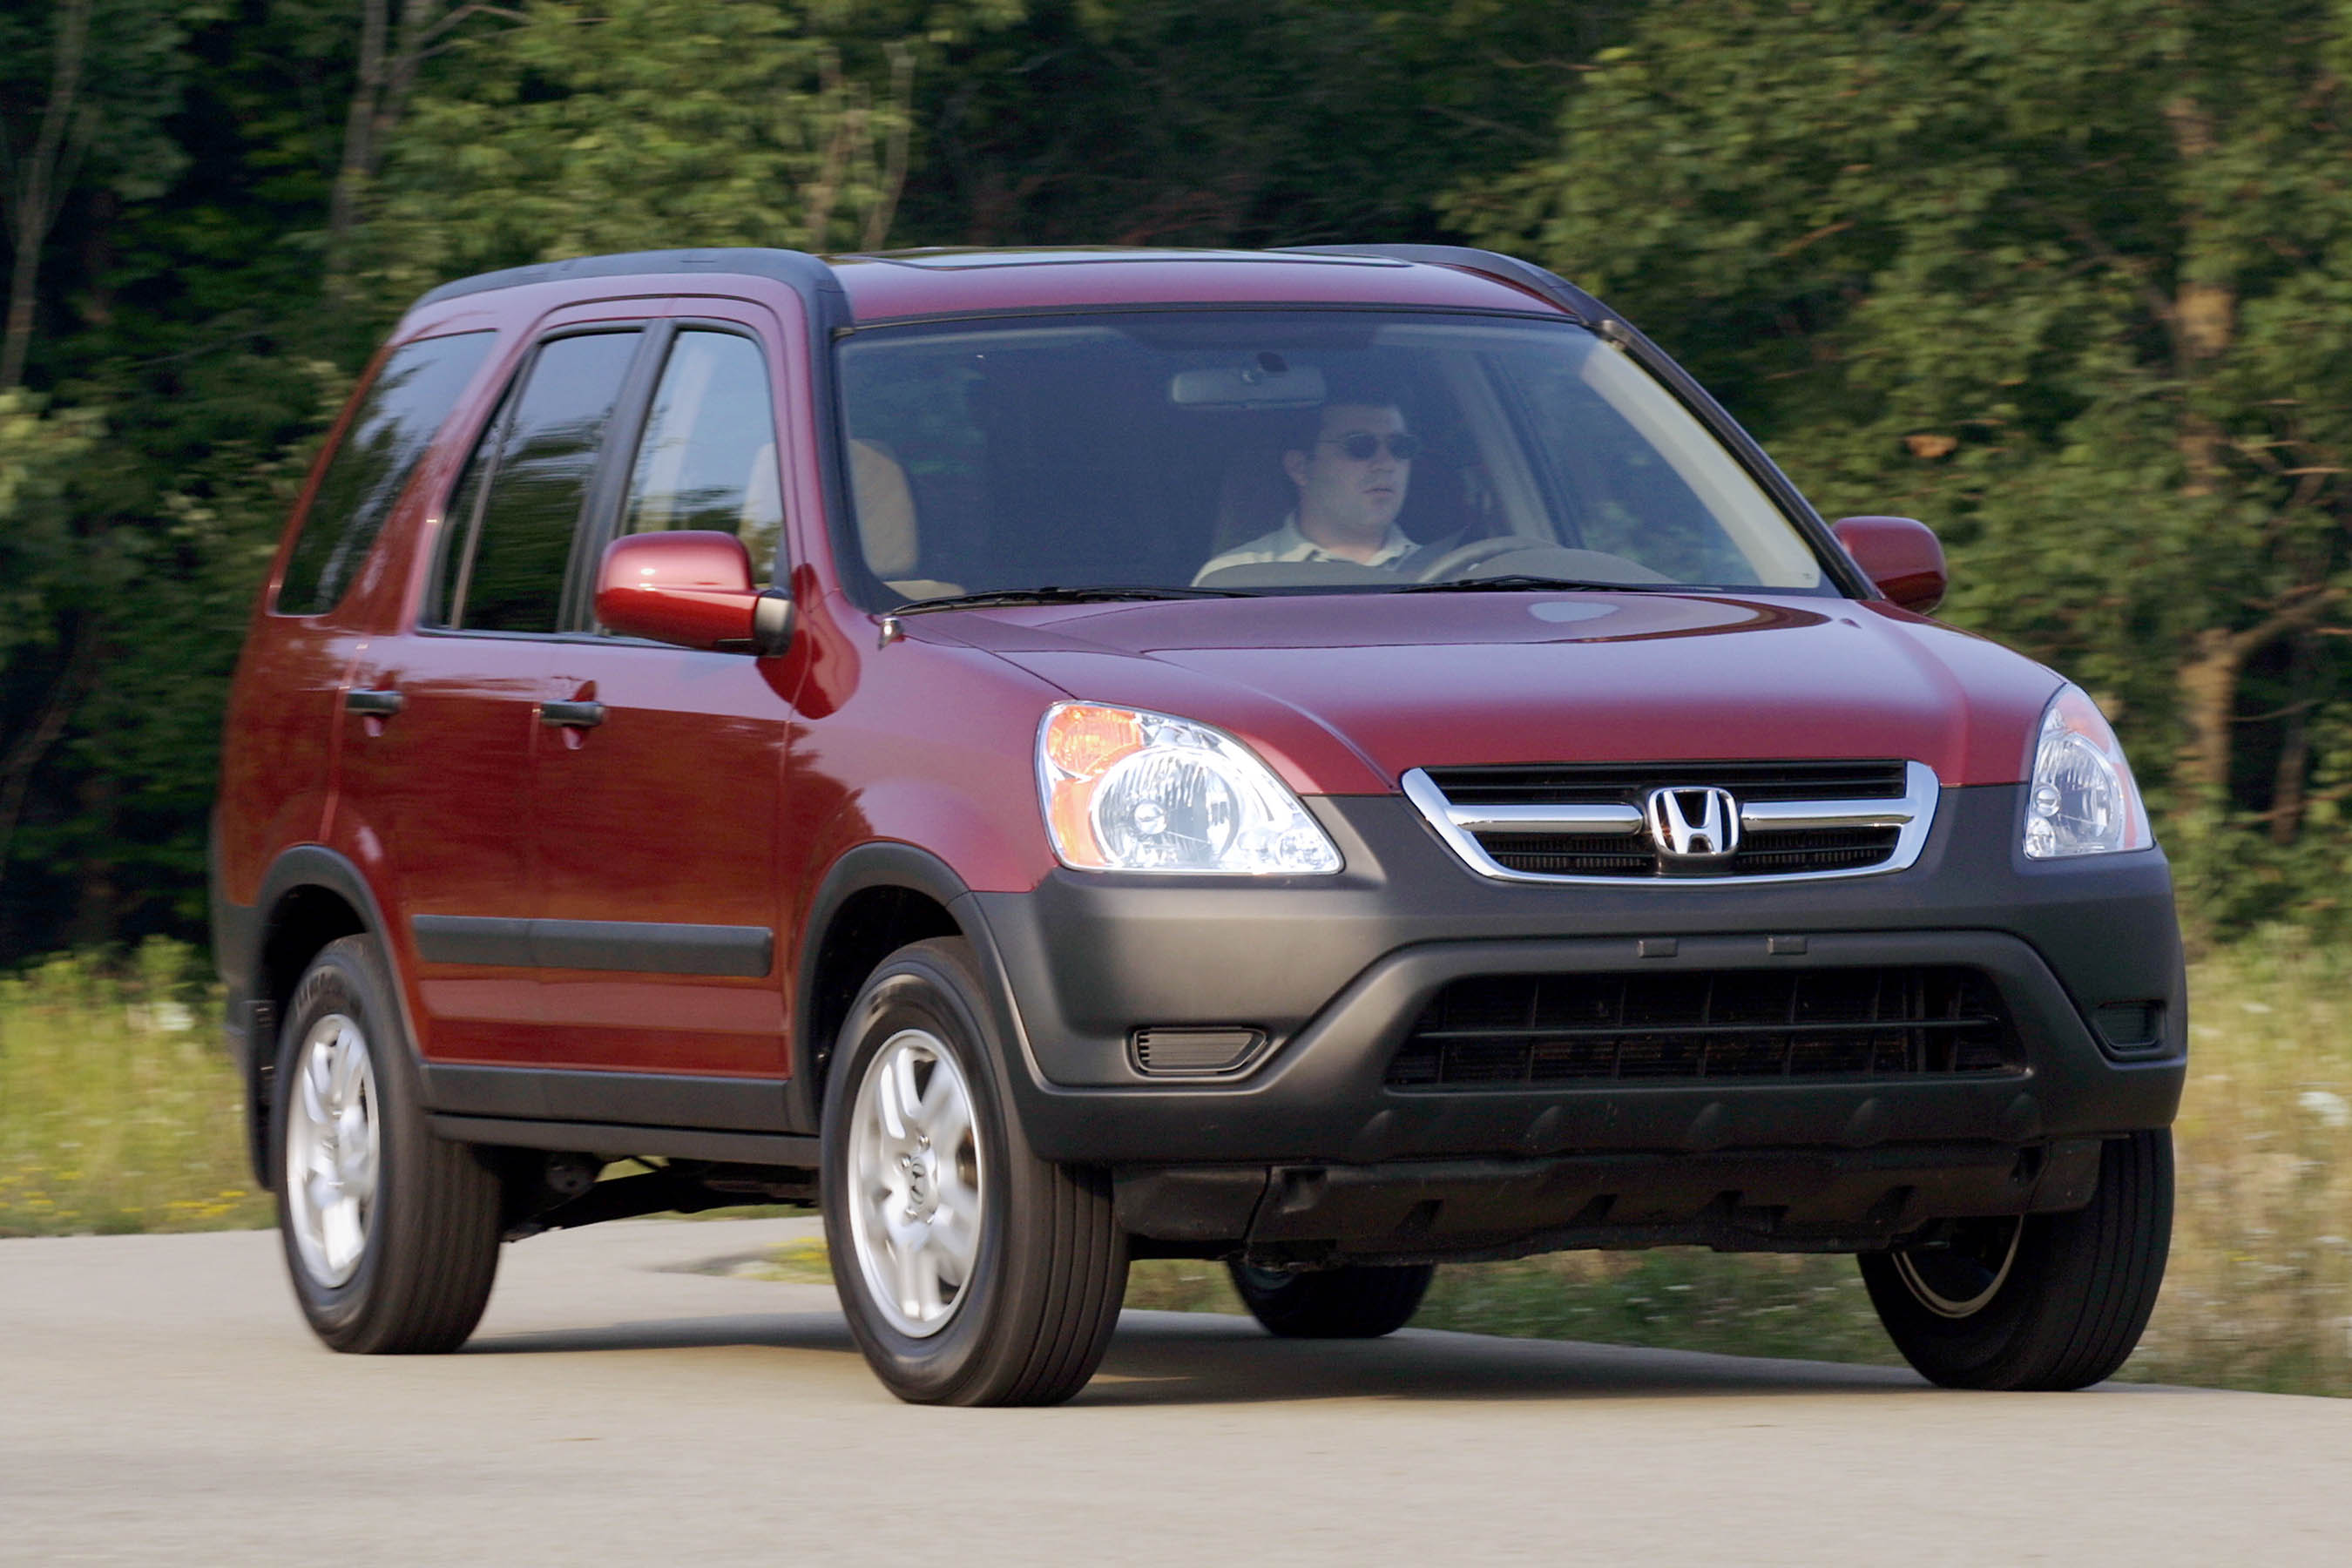 Honda cr приводы. Honda CRV 2003. Honda CRV 2 поколение. Honda CRV 2002. Honda CRV 2001-2006.